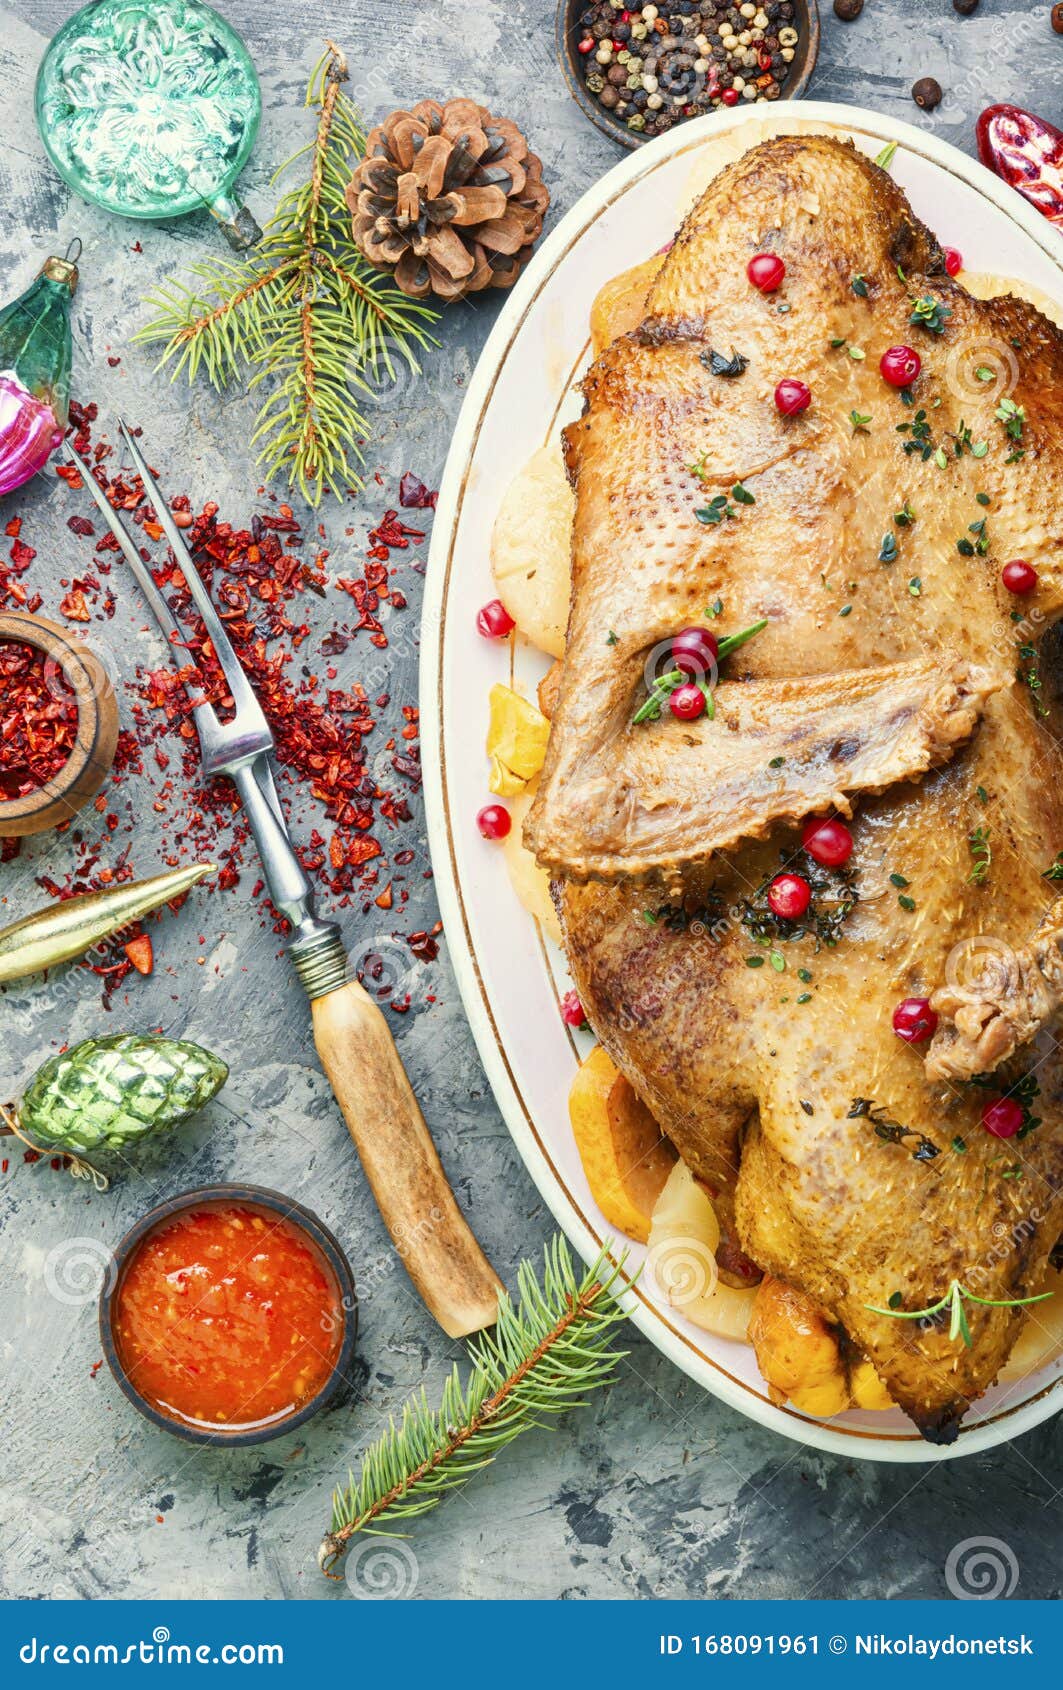 Roasted Christmas goose stock image. Image of cuisine - 168091961